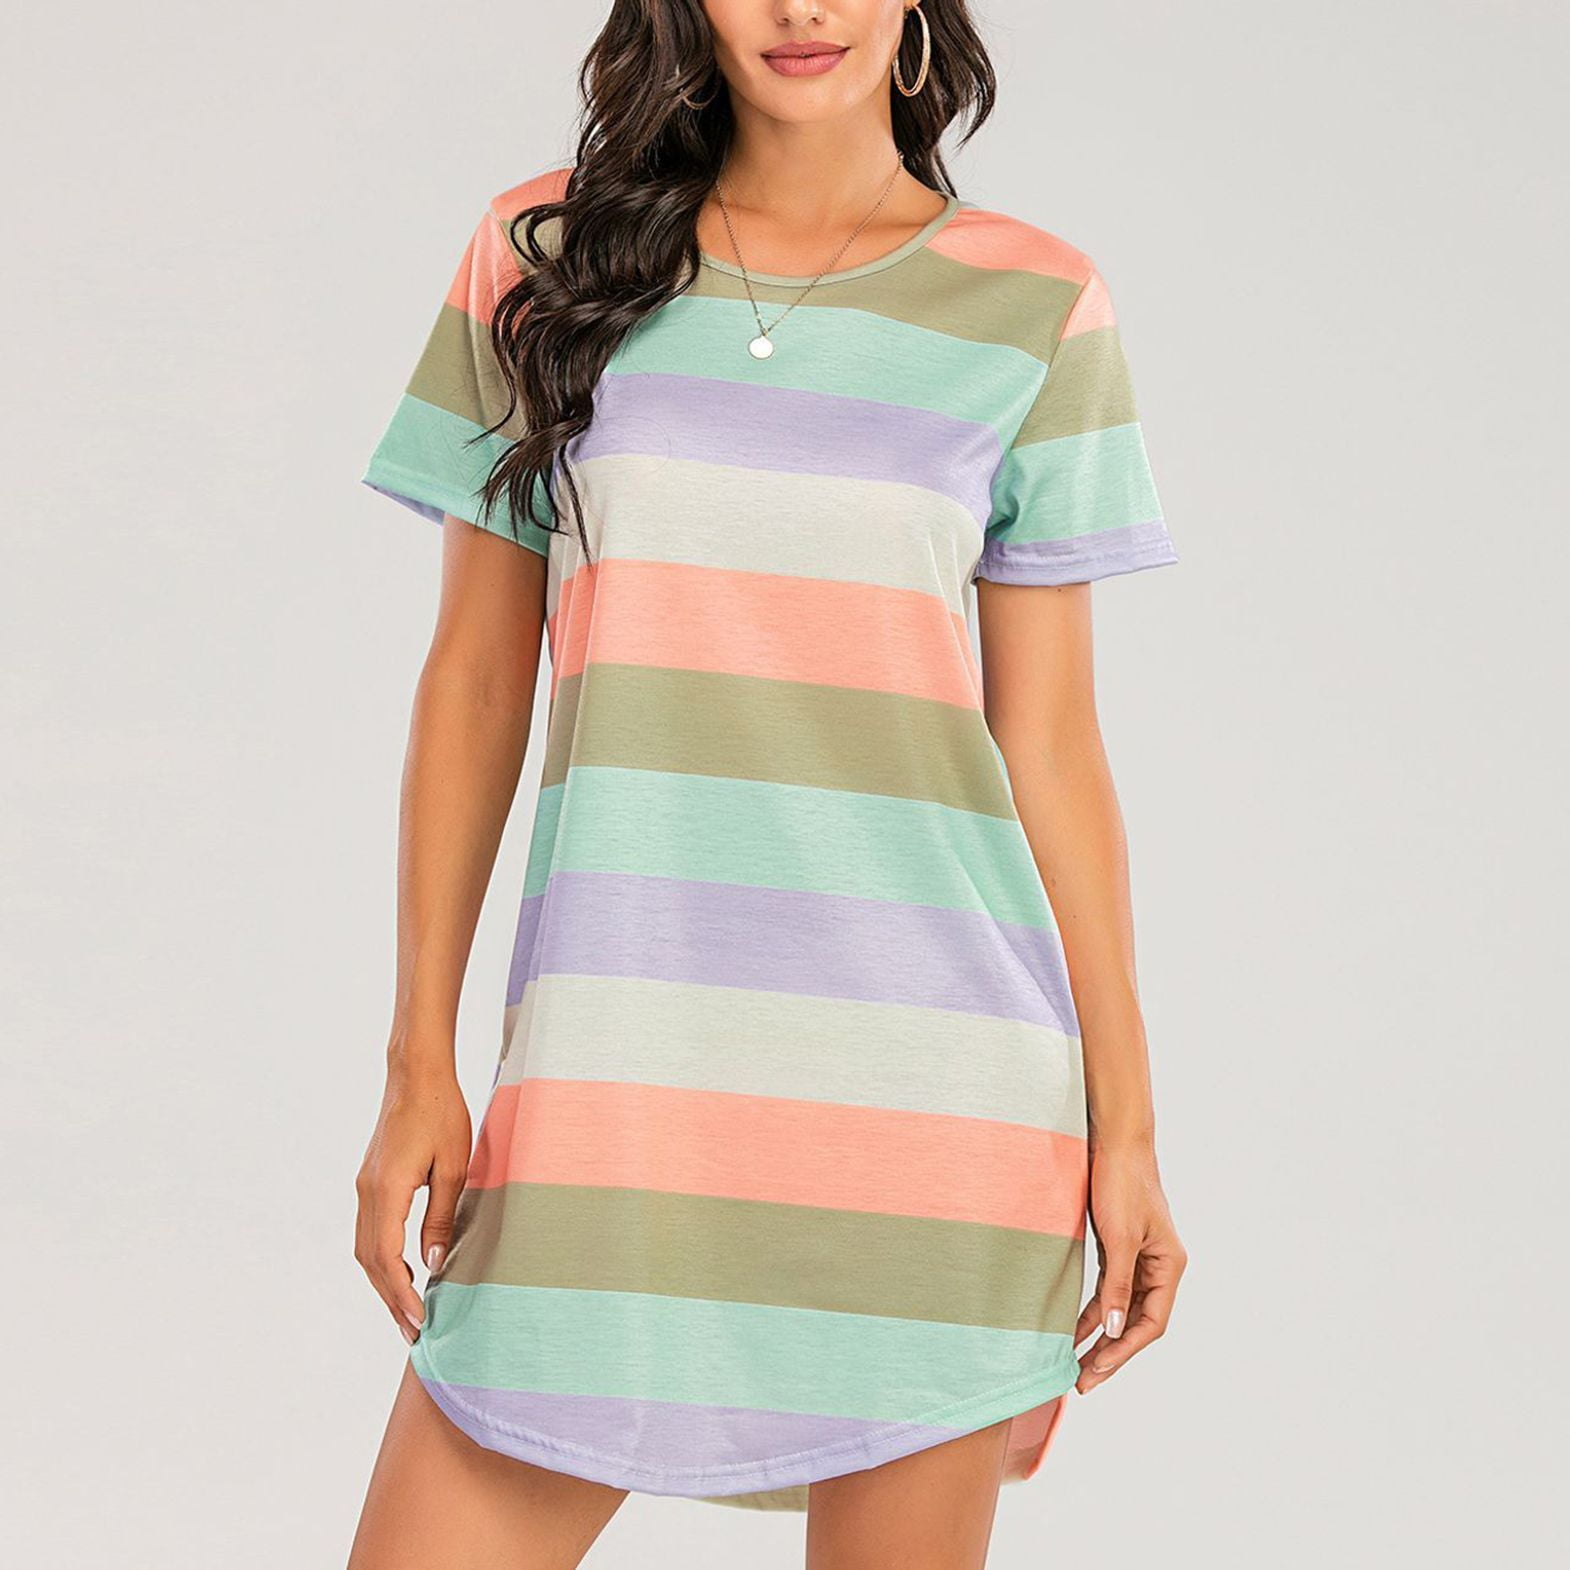 SWSMCLT Women's Cute Pajama Dress Rainbow Lightweight Cotton Summer ...